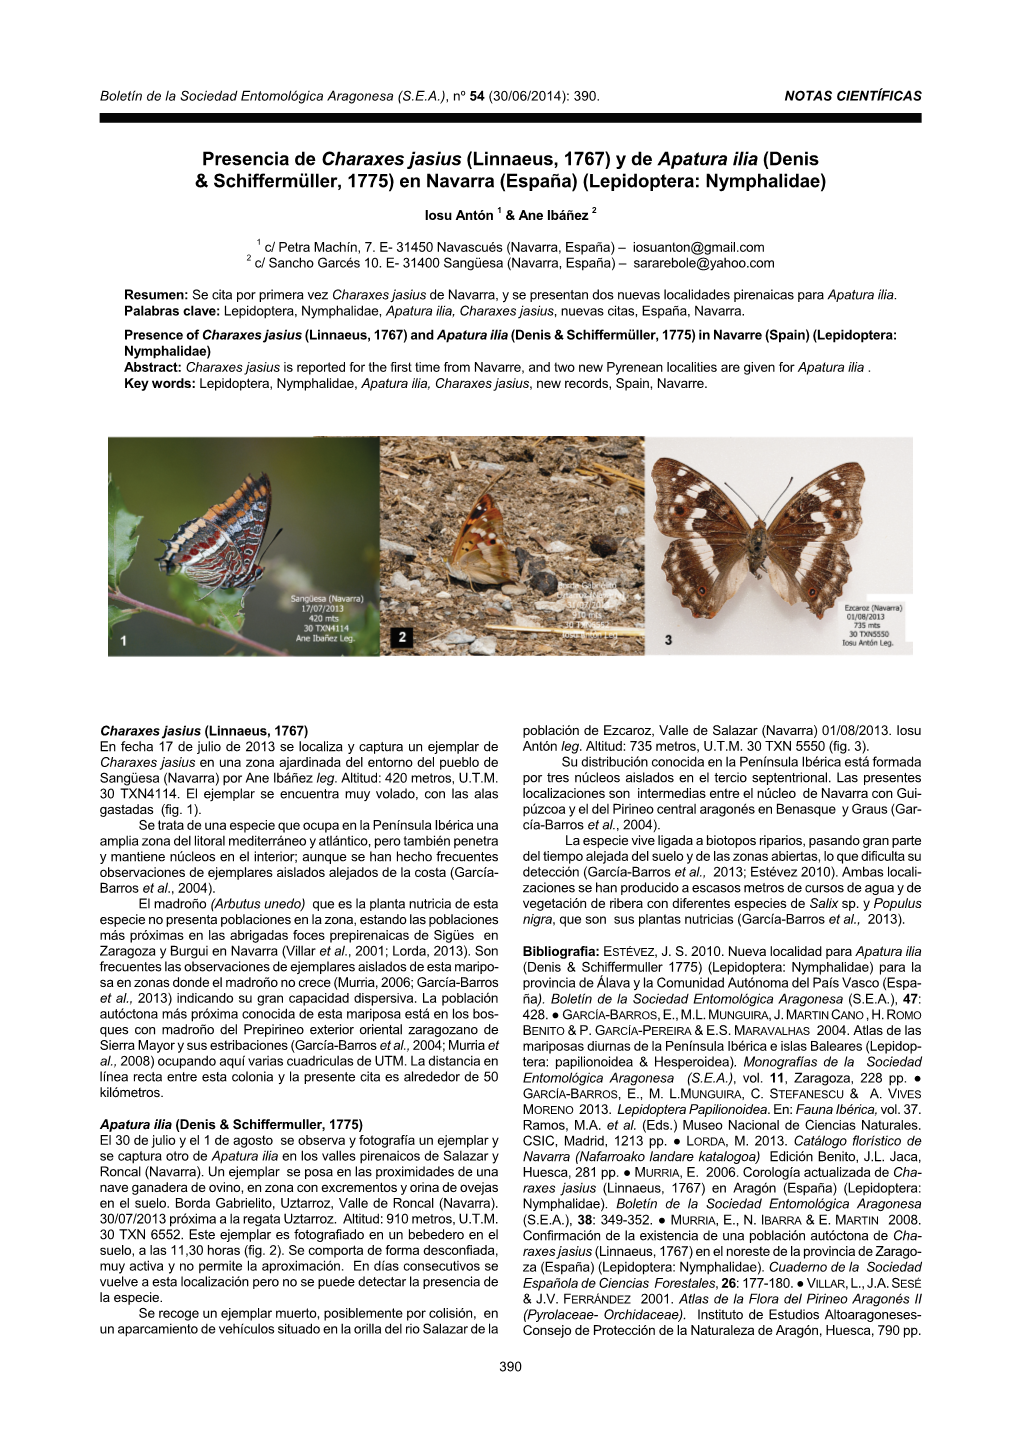 Presencia De Charaxes Jasius (Linnaeus, 1767) Y De Apatura Ilia (Denis & Schiffermüller, 1775) En Navarra (España) (Lepidoptera: Nymphalidae)